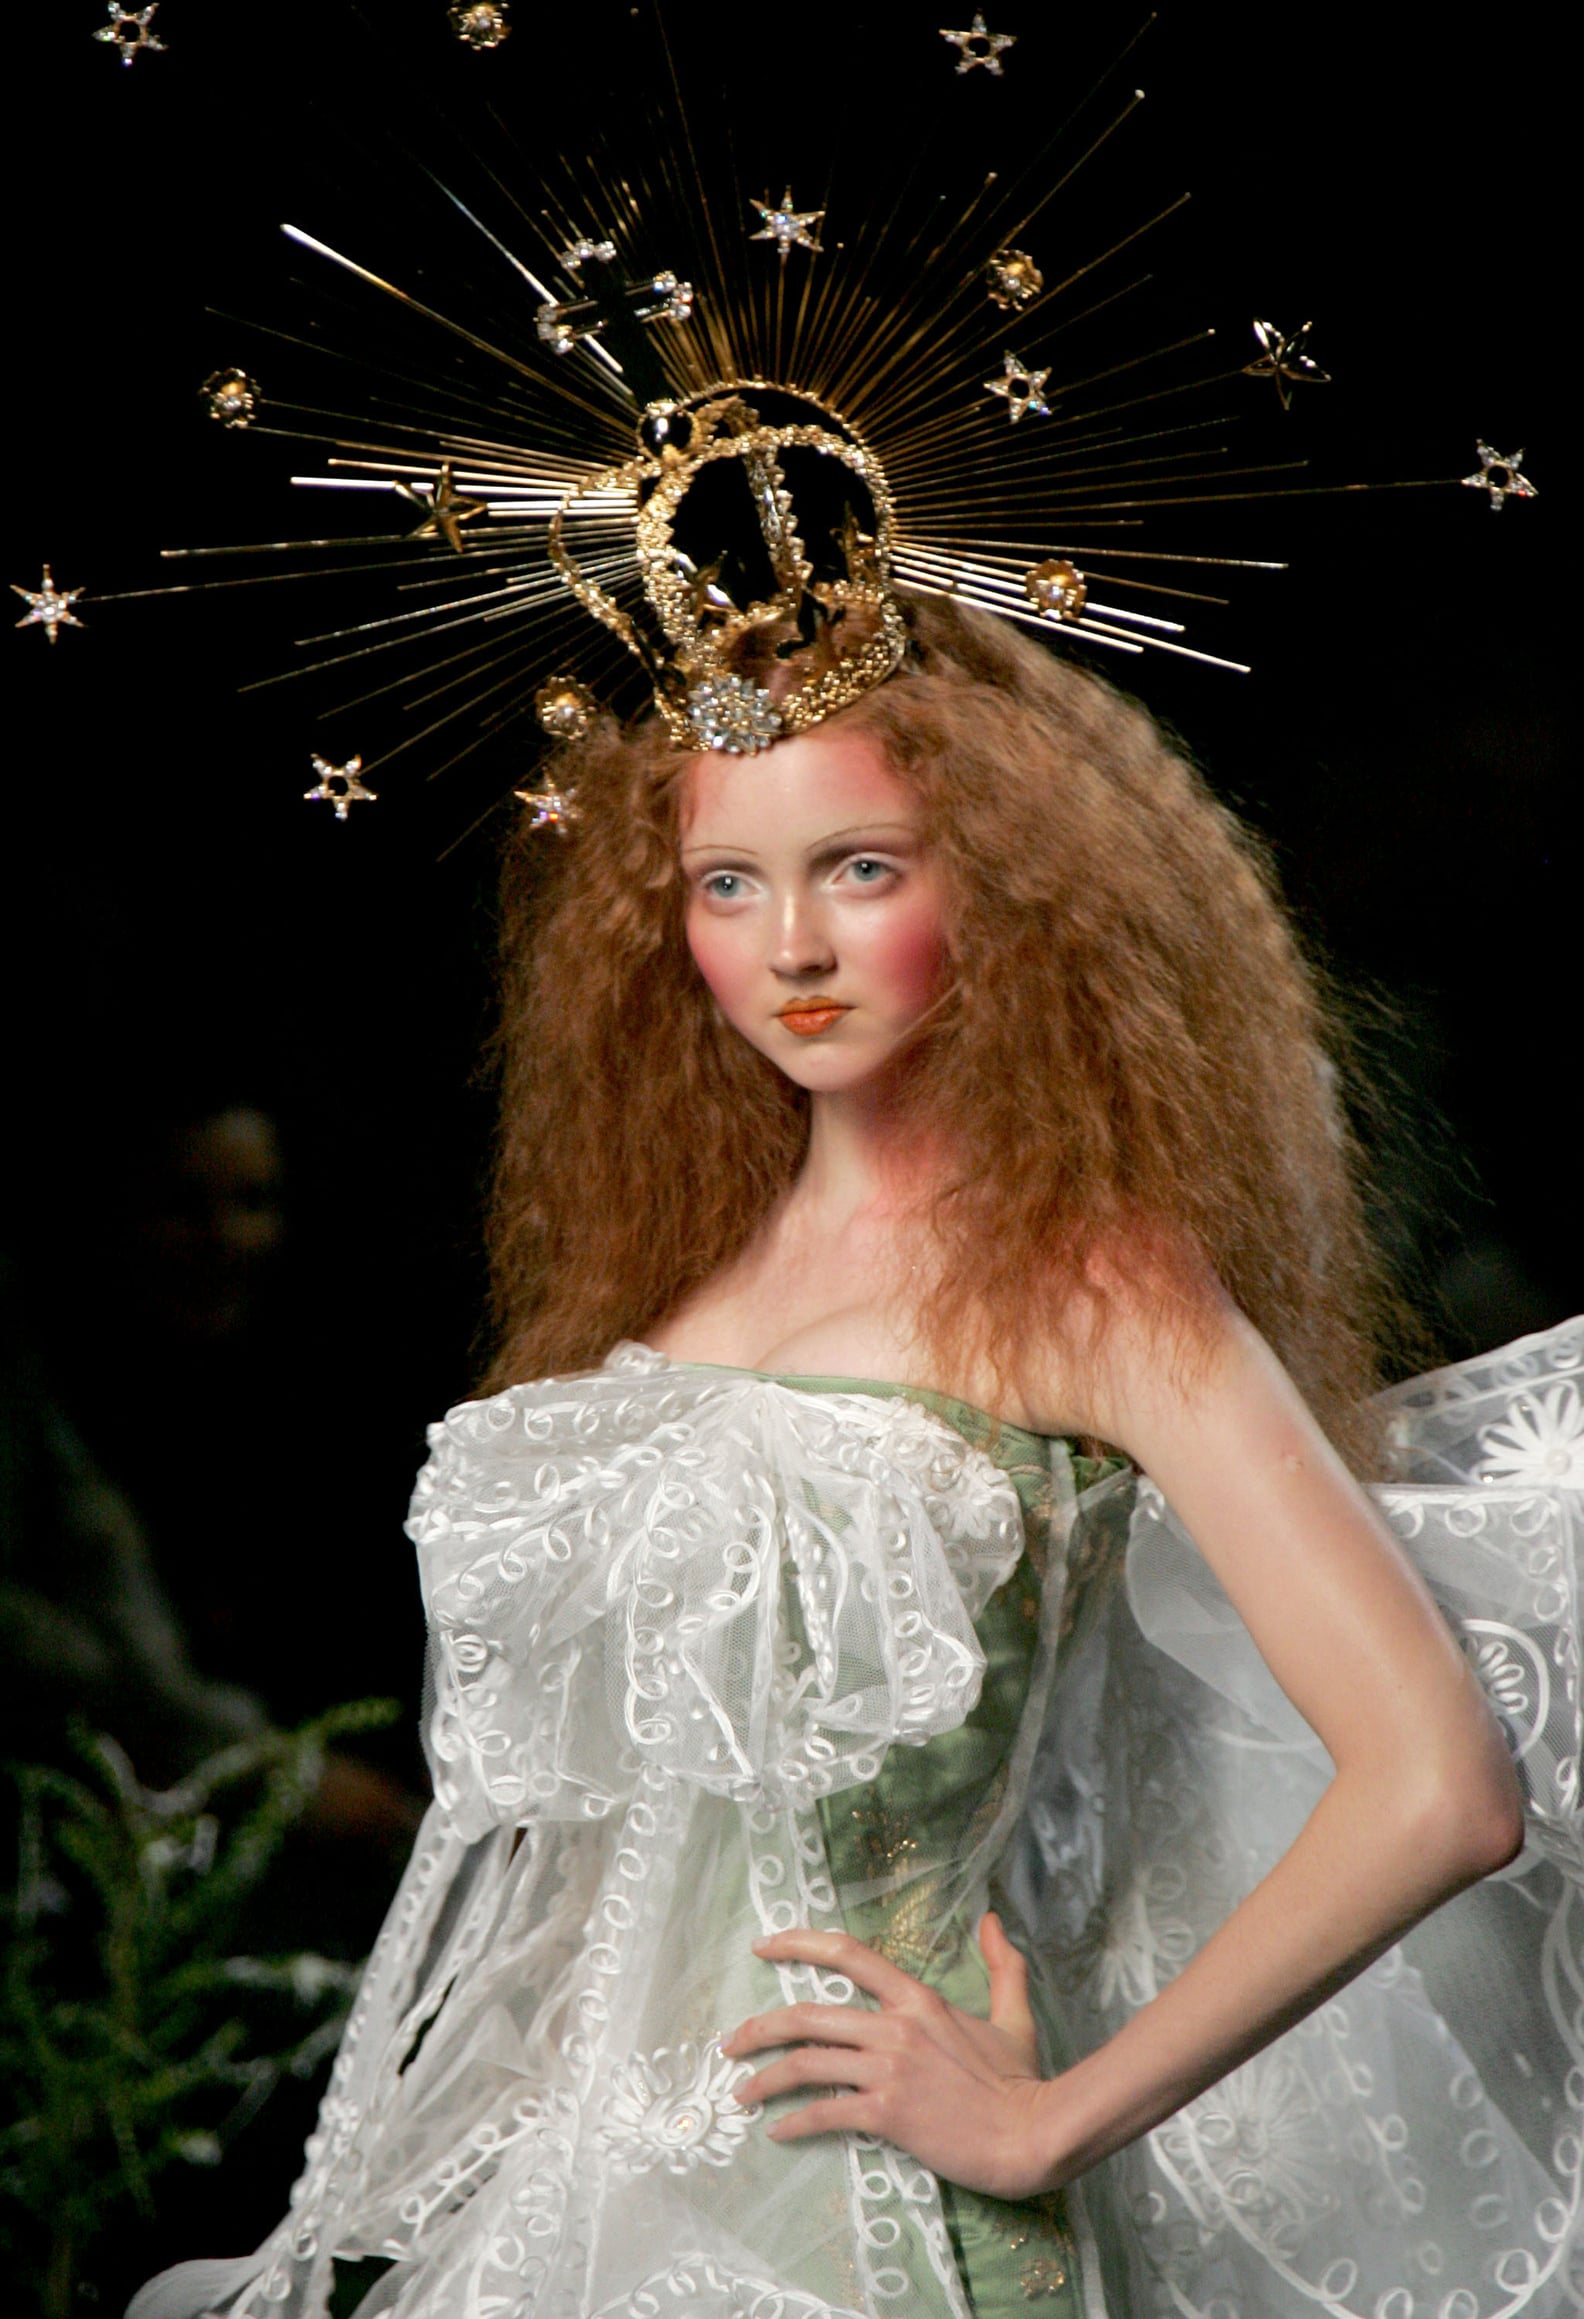 Christian Dior Runway Hair and Makeup Looks | POPSUGAR Beauty